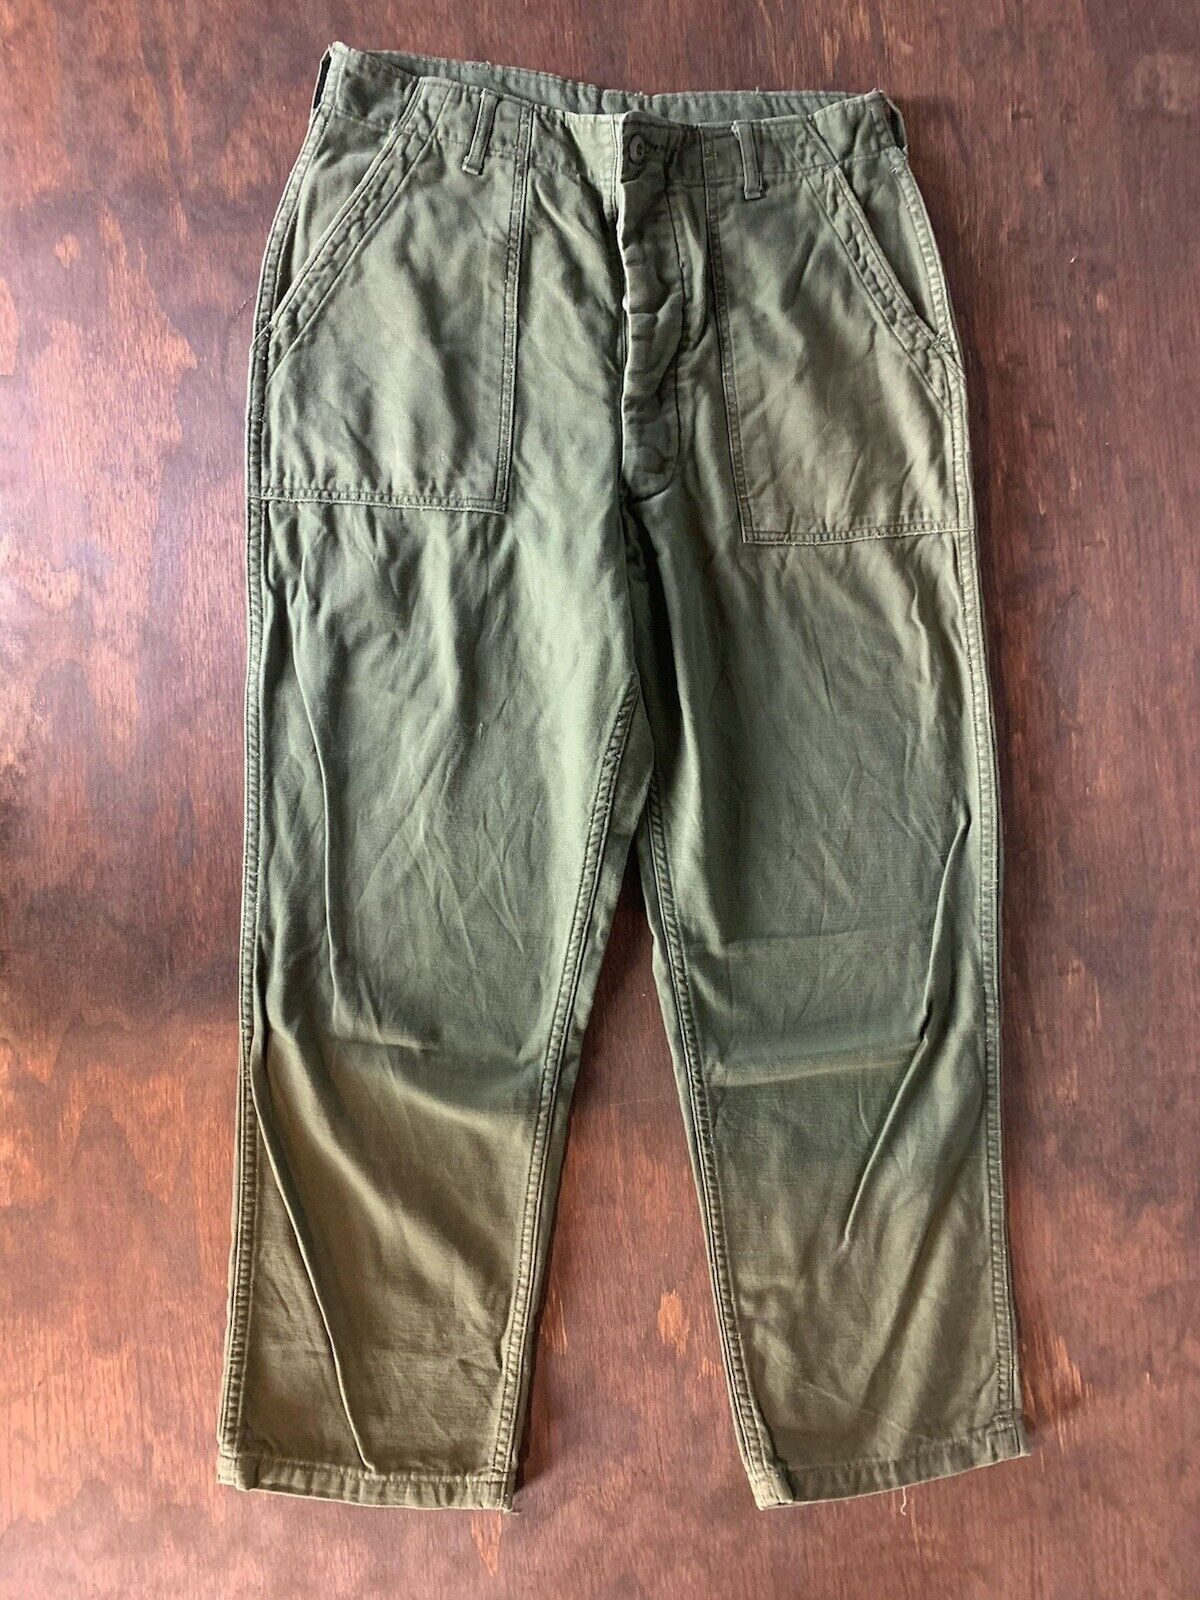 Vintage 1973 Vietnam US Army Cotton Sateen OG-107 Utility Trousers Pants 32x28